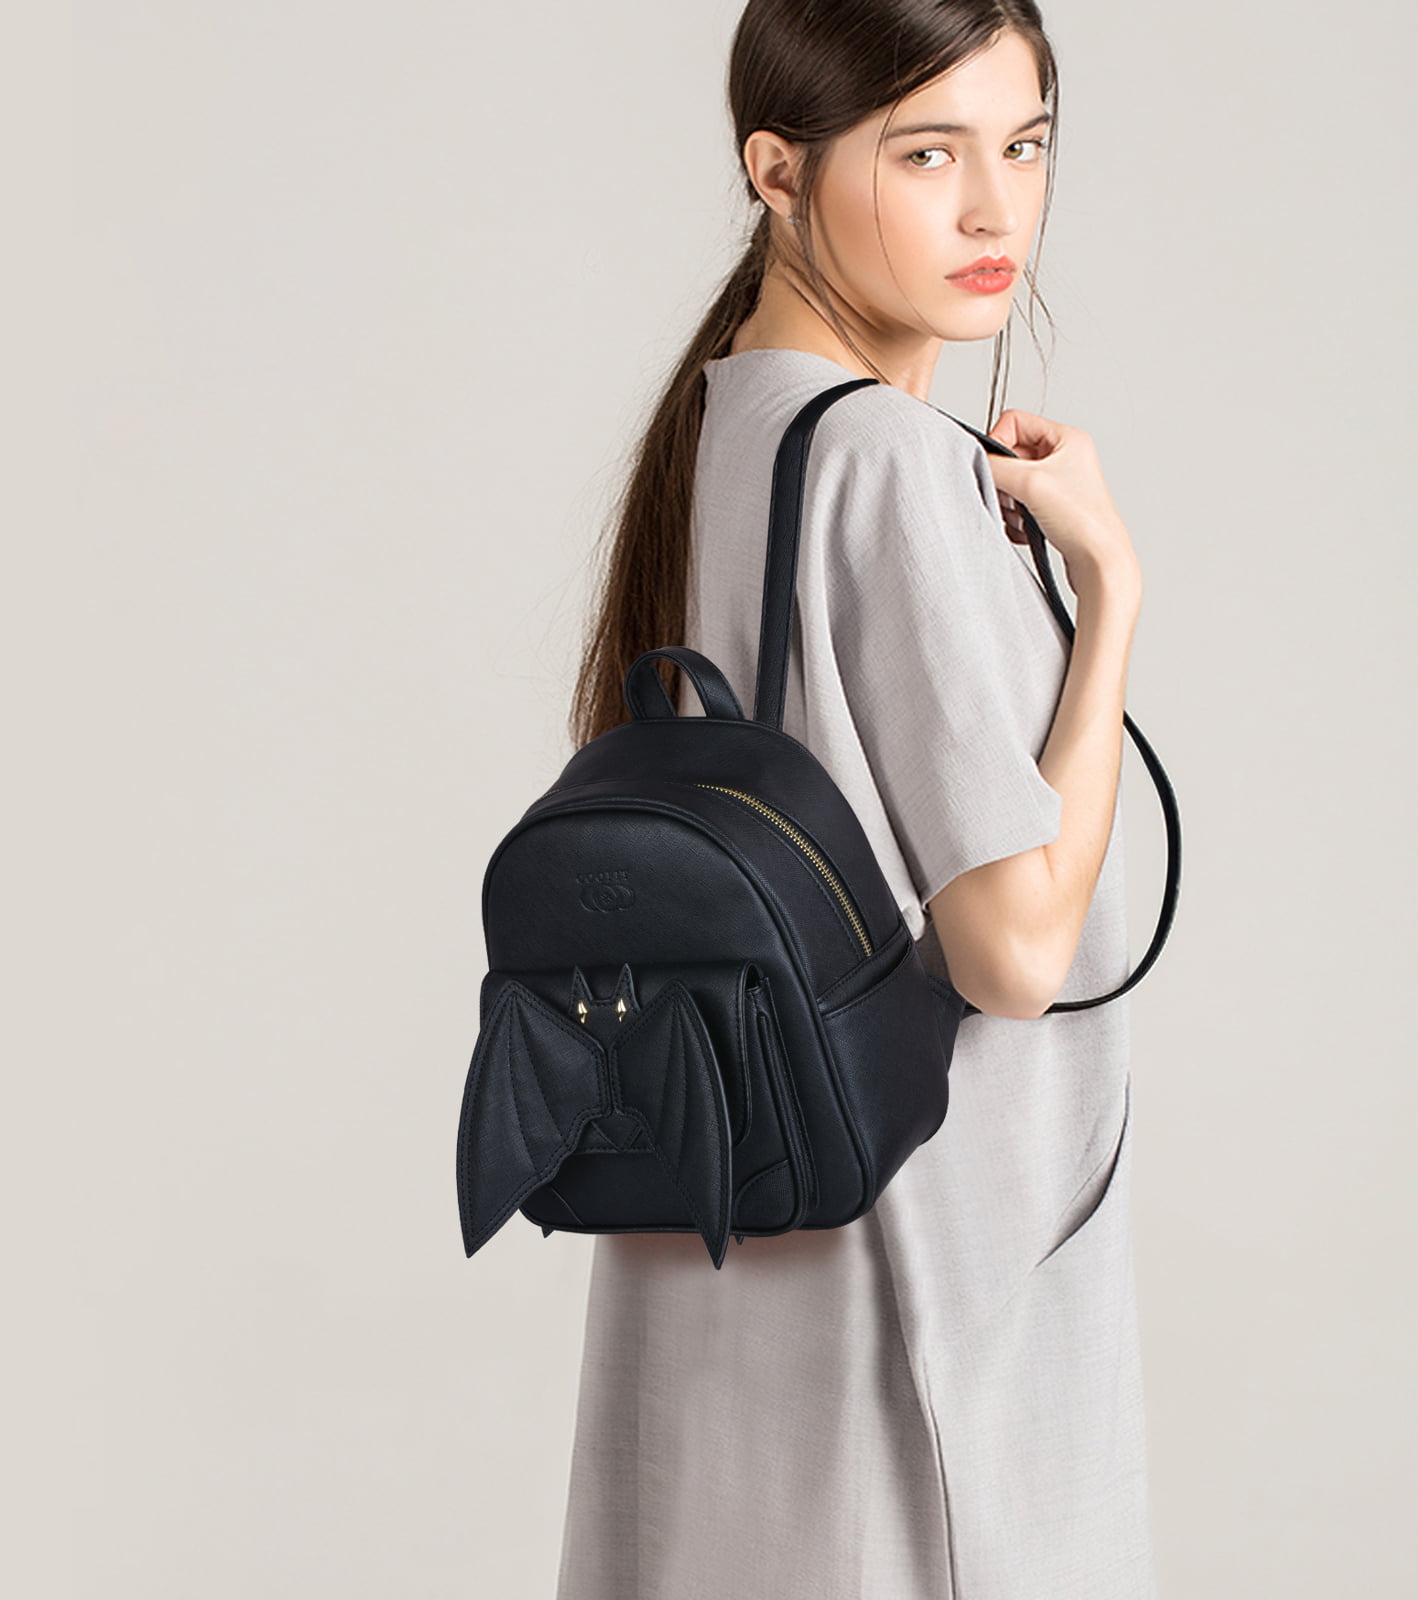 COOFIT Bat Purse Gothic Backpack Purse Gothic Bags Mini Backpack for Women Mini Backpack 